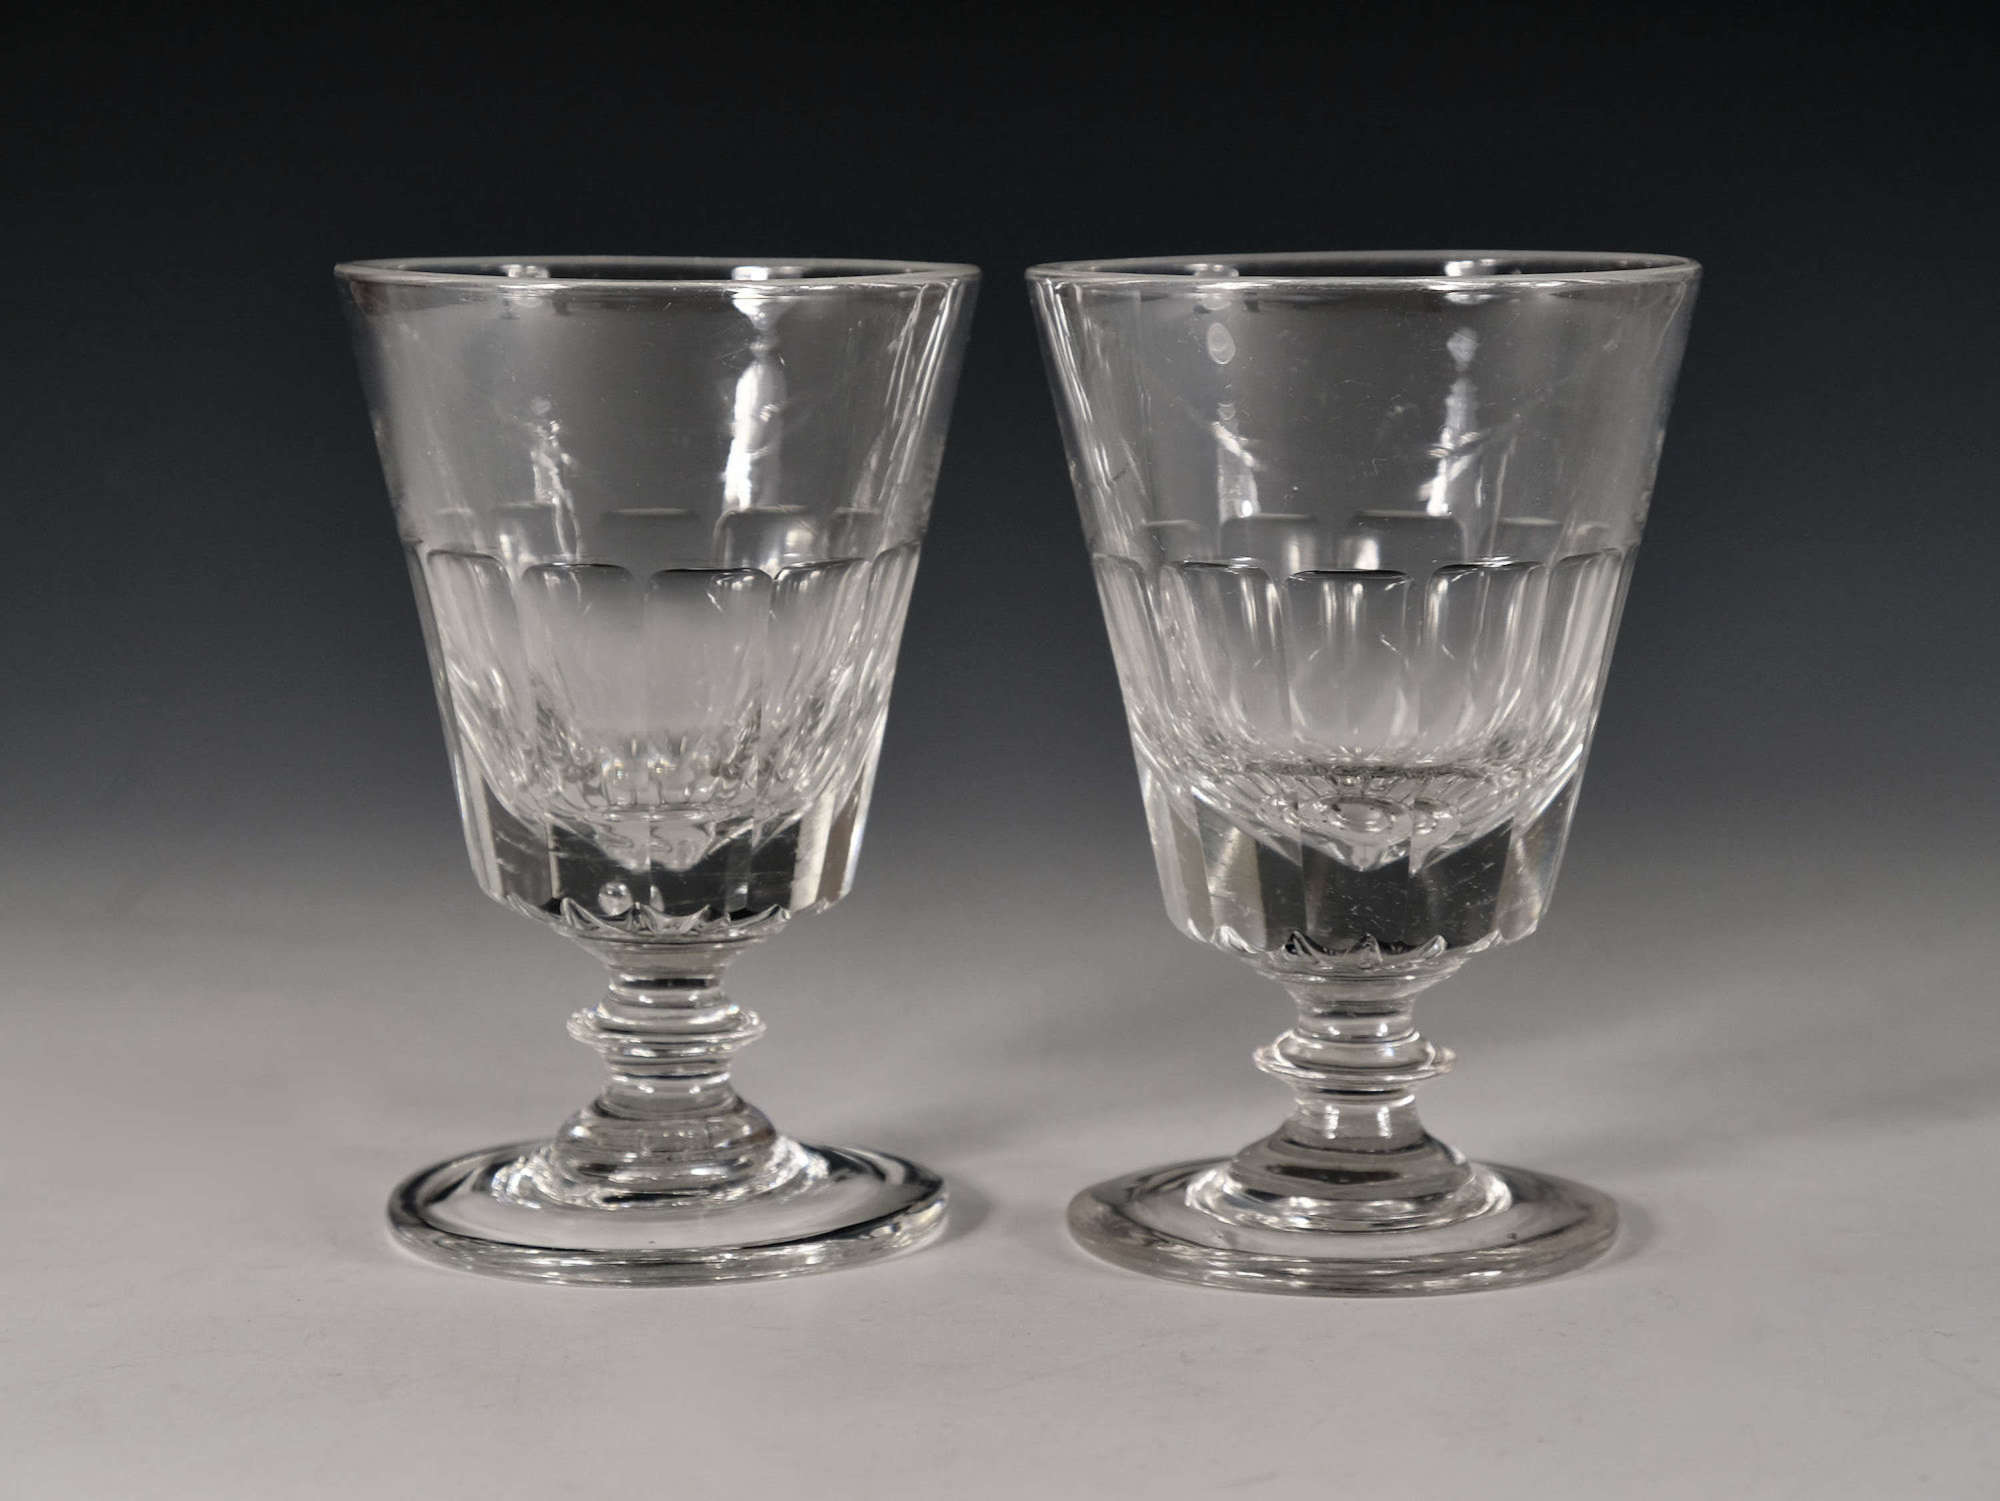 Antique glass rummer pair English c1835